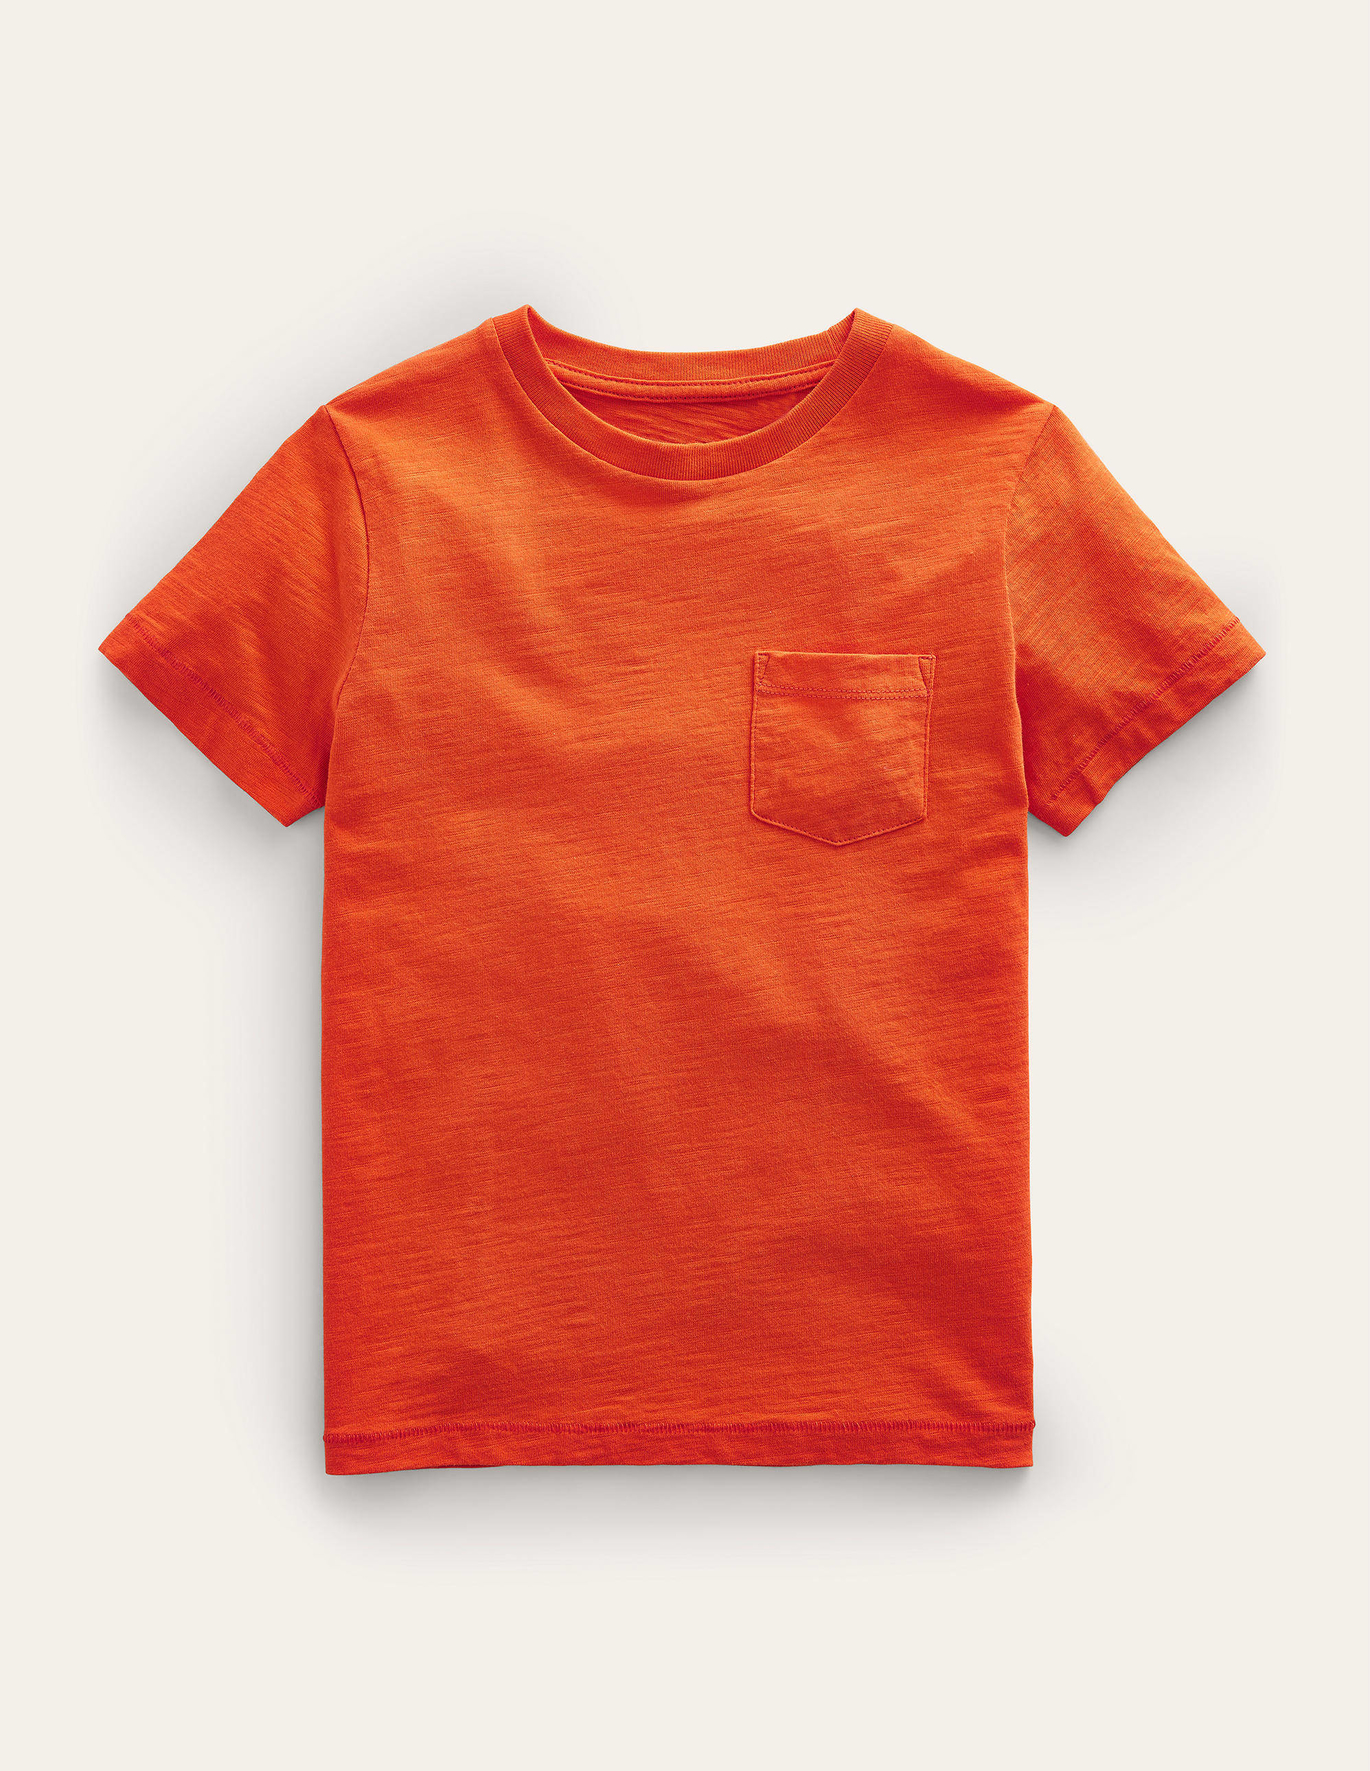 Boden Washed Slub T-shirt - Mandarin Orange